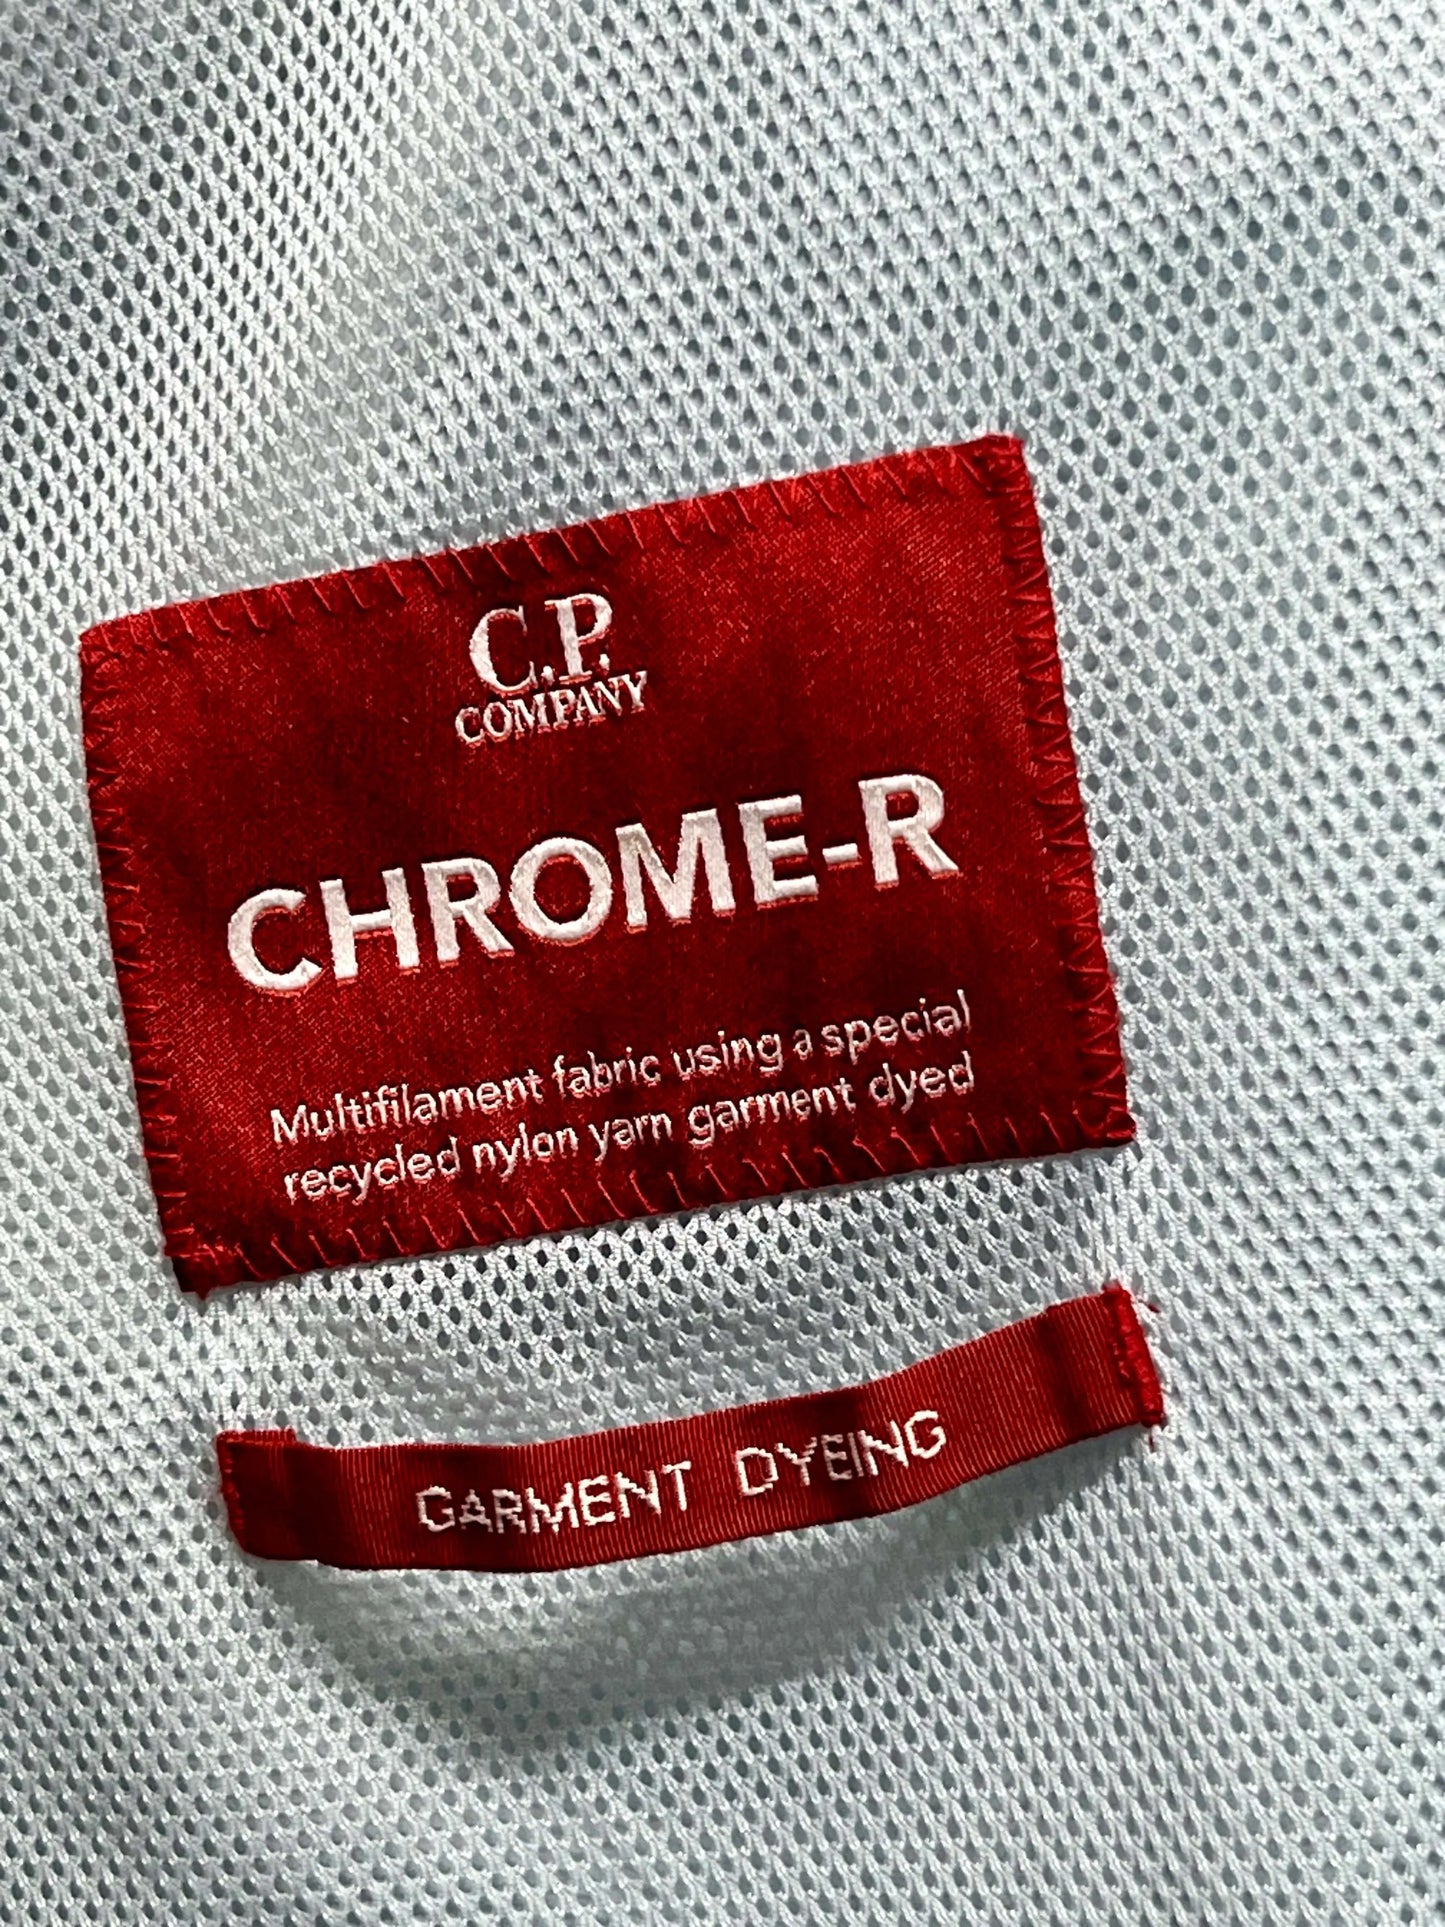 C.P. Company, Overshirt Chrome-R, starlight blue C.P. Company